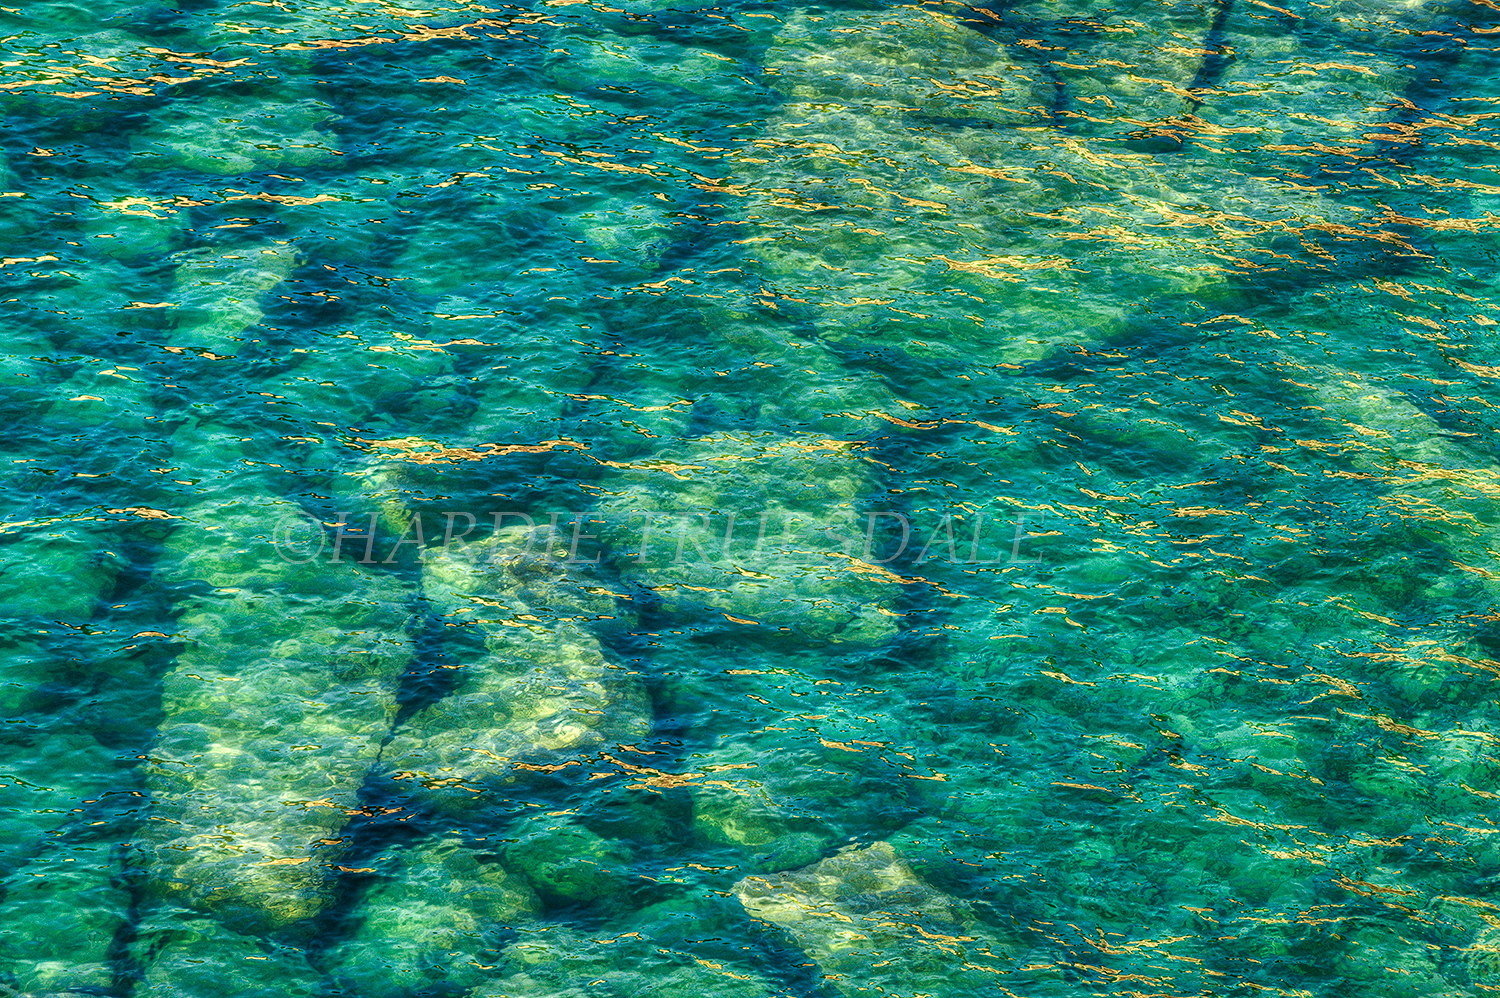  MI#039 "Submerged, Pictured Rocks Nat Lakeshore, Lake Superior" 